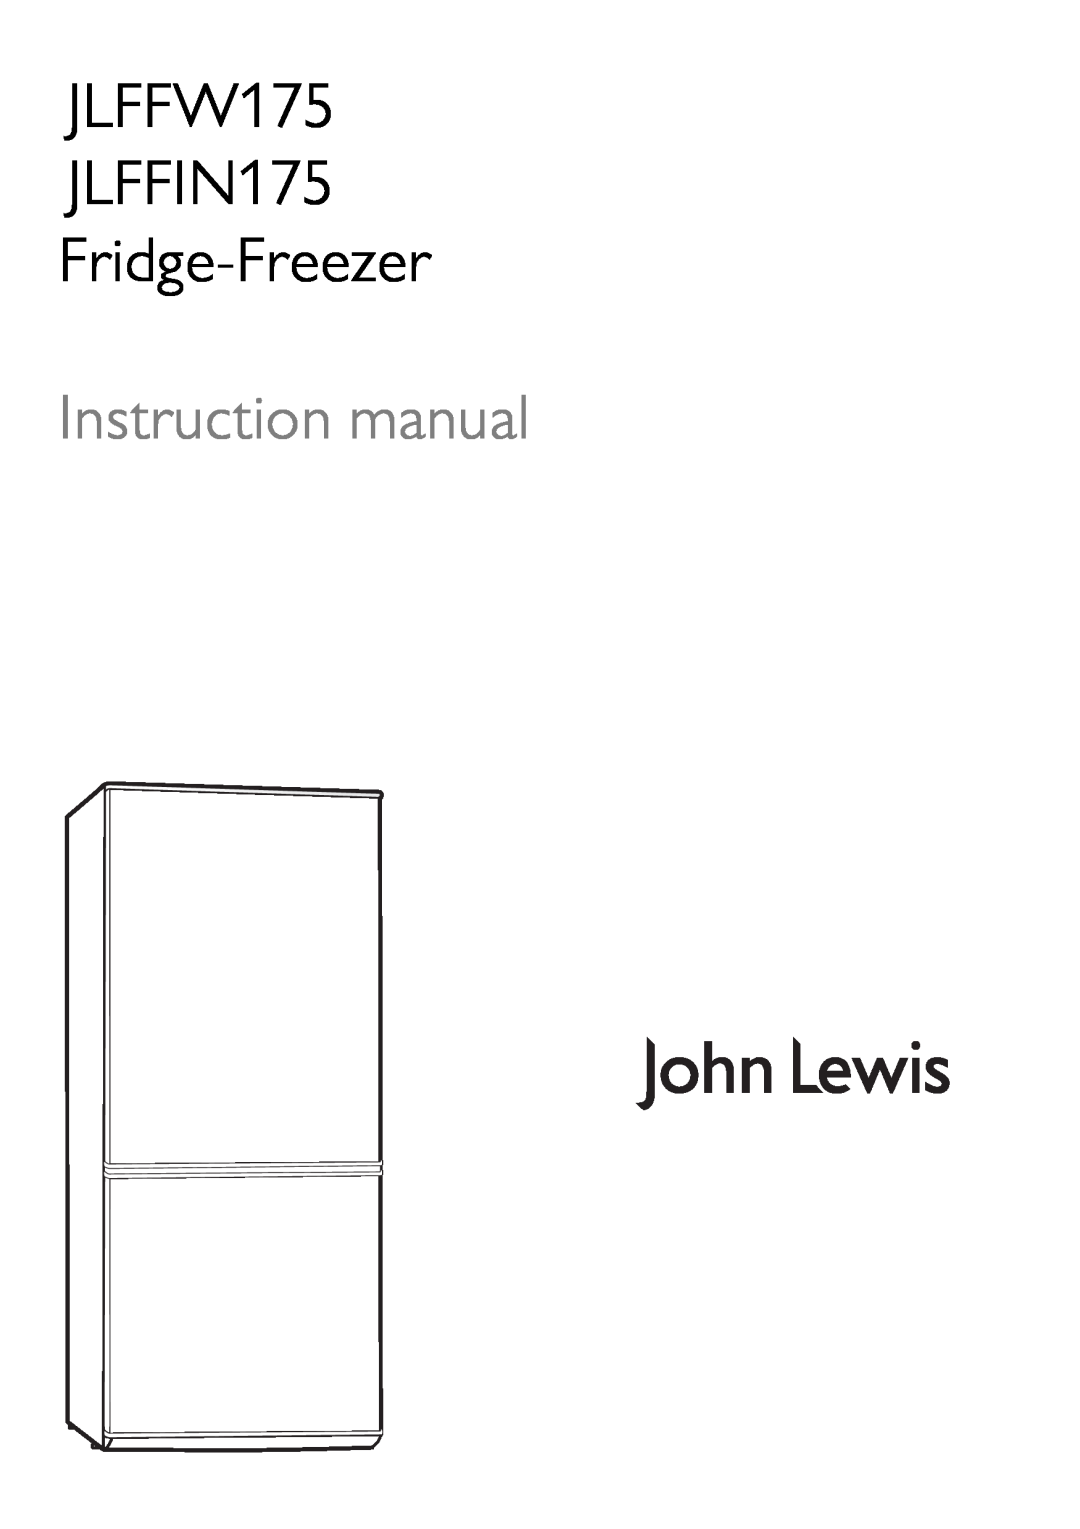 John Lewis JLFFW175 instruction manual JLFFIN175 Fridge-Freezer 